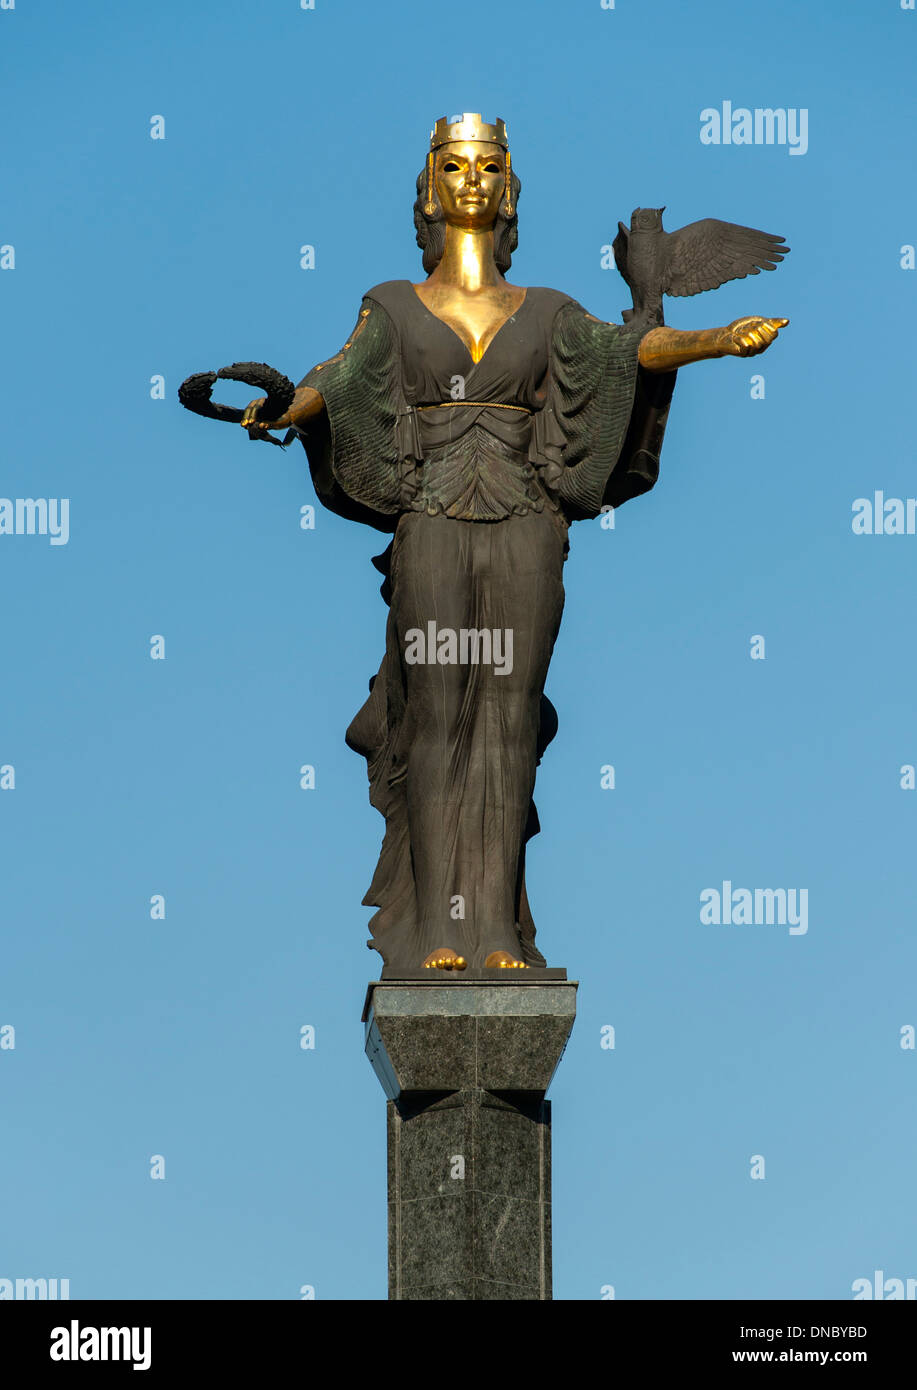 La Statue de Sveta Sofia (Saint Sofia) à Sofia, capitale de la Bulgarie. Banque D'Images